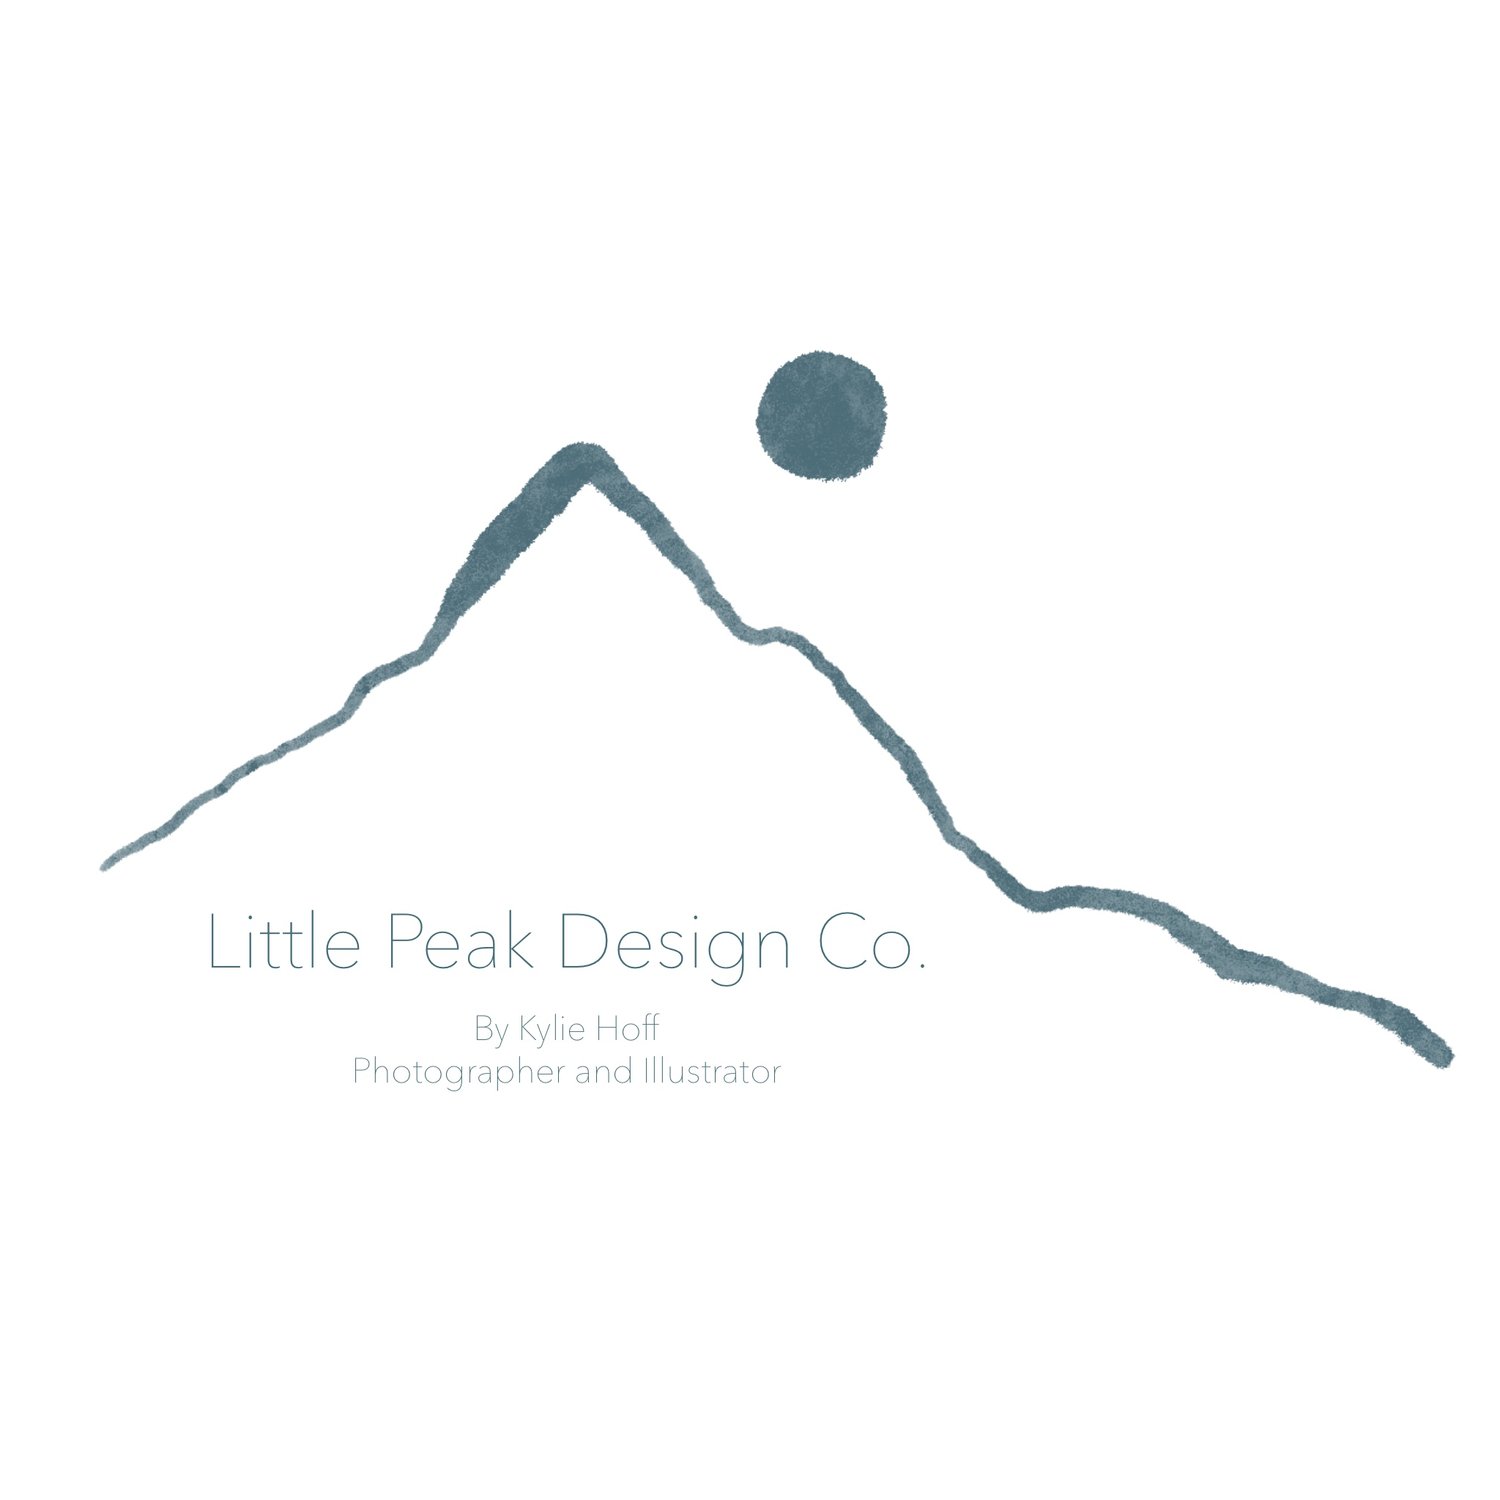 Little Peak Design Co.